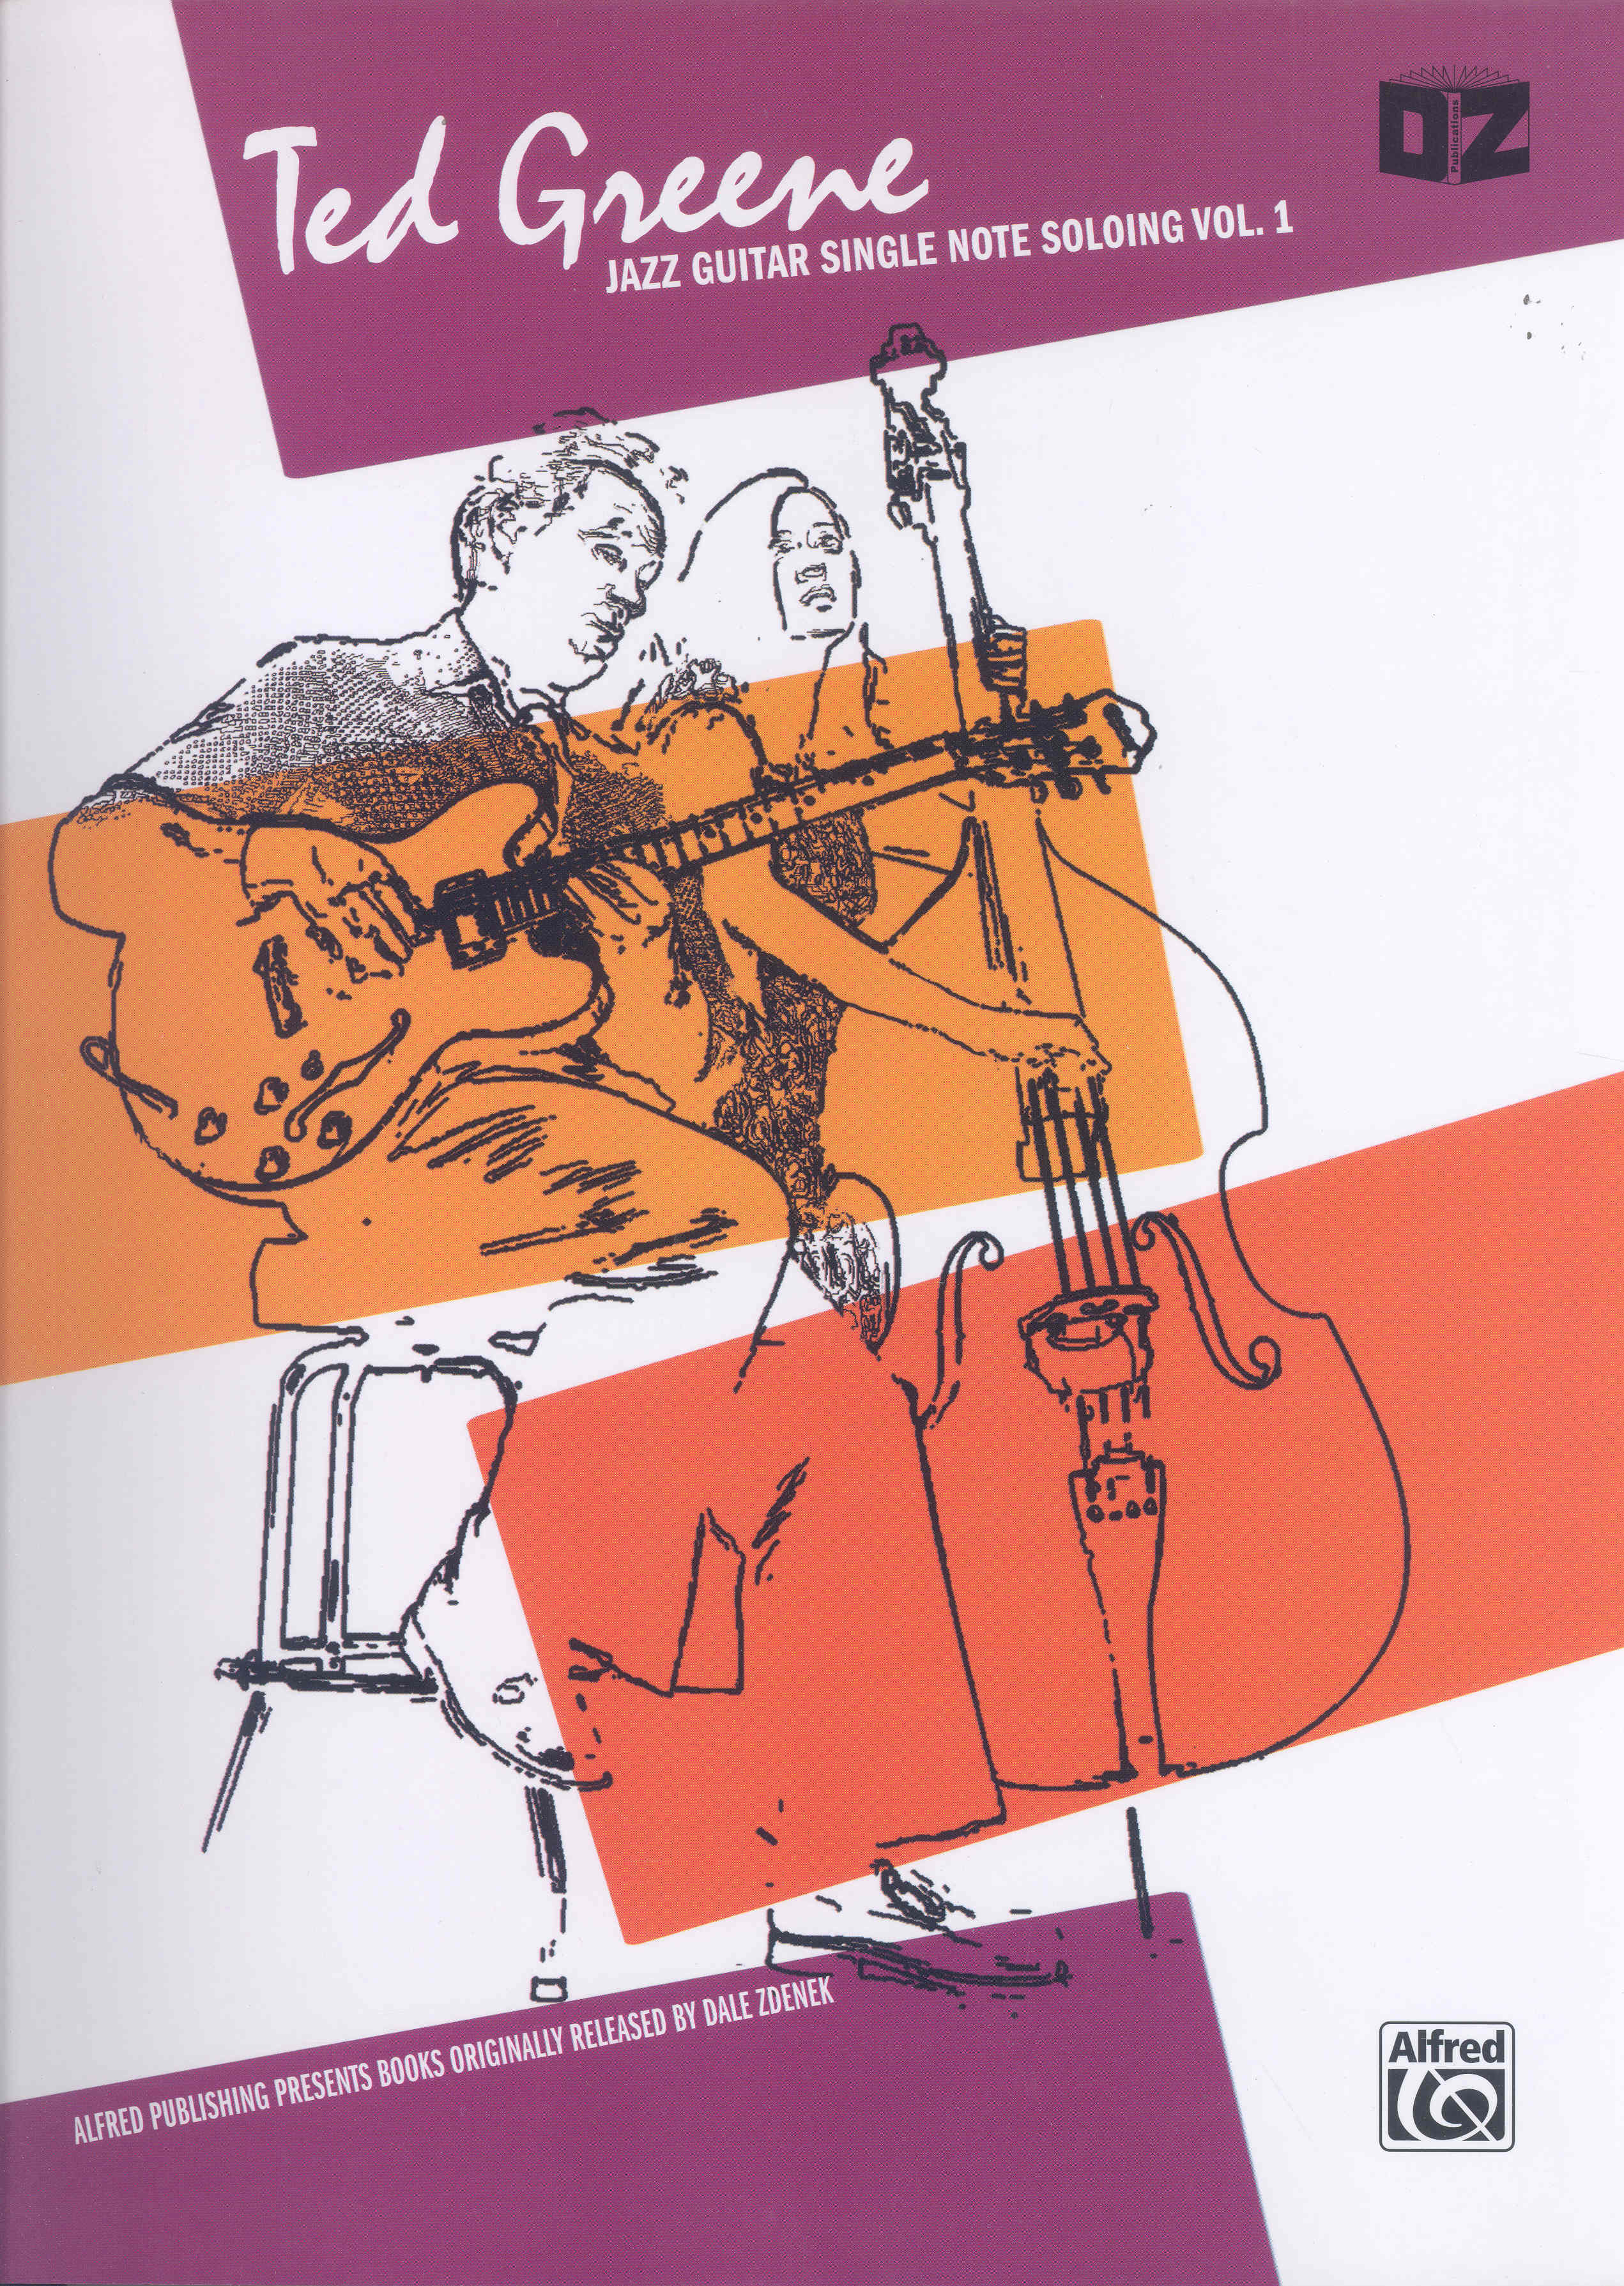 Jazz Guitar Single Note Soloing Vol 1 Greene Sheet Music Songbook